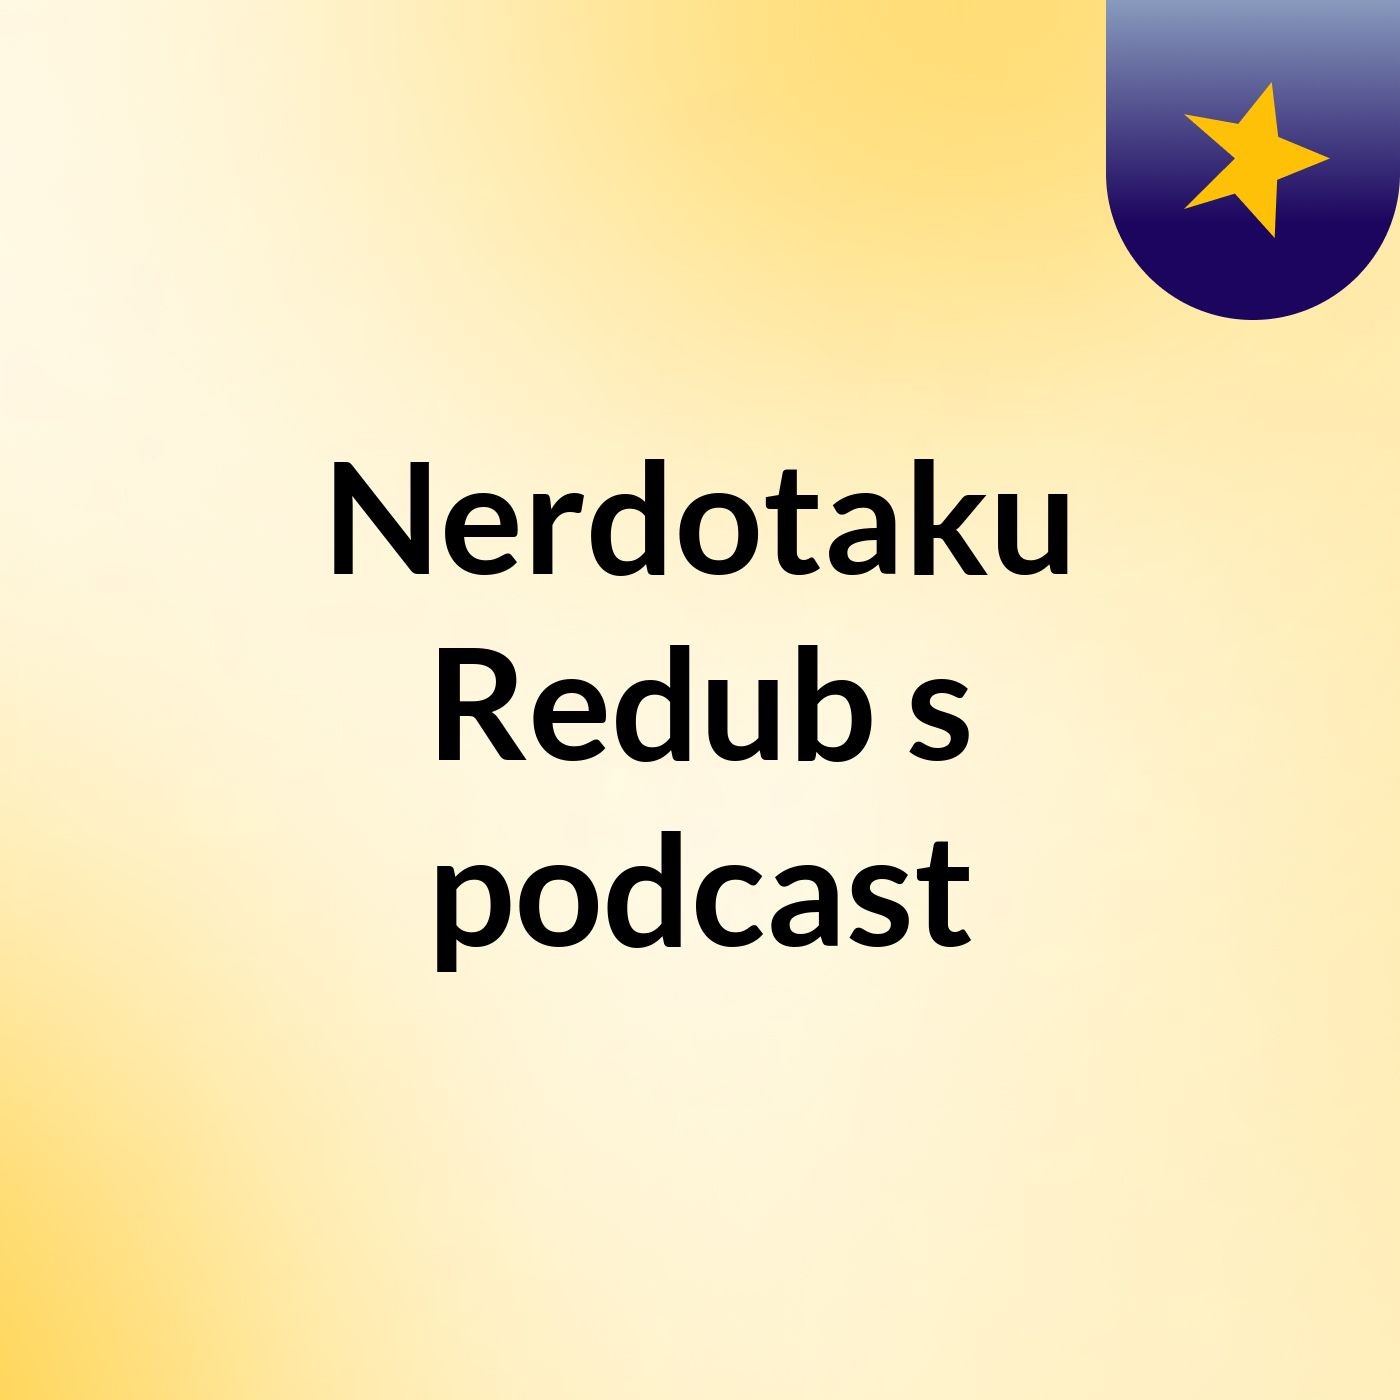 Nerdotaku Redub's podcast